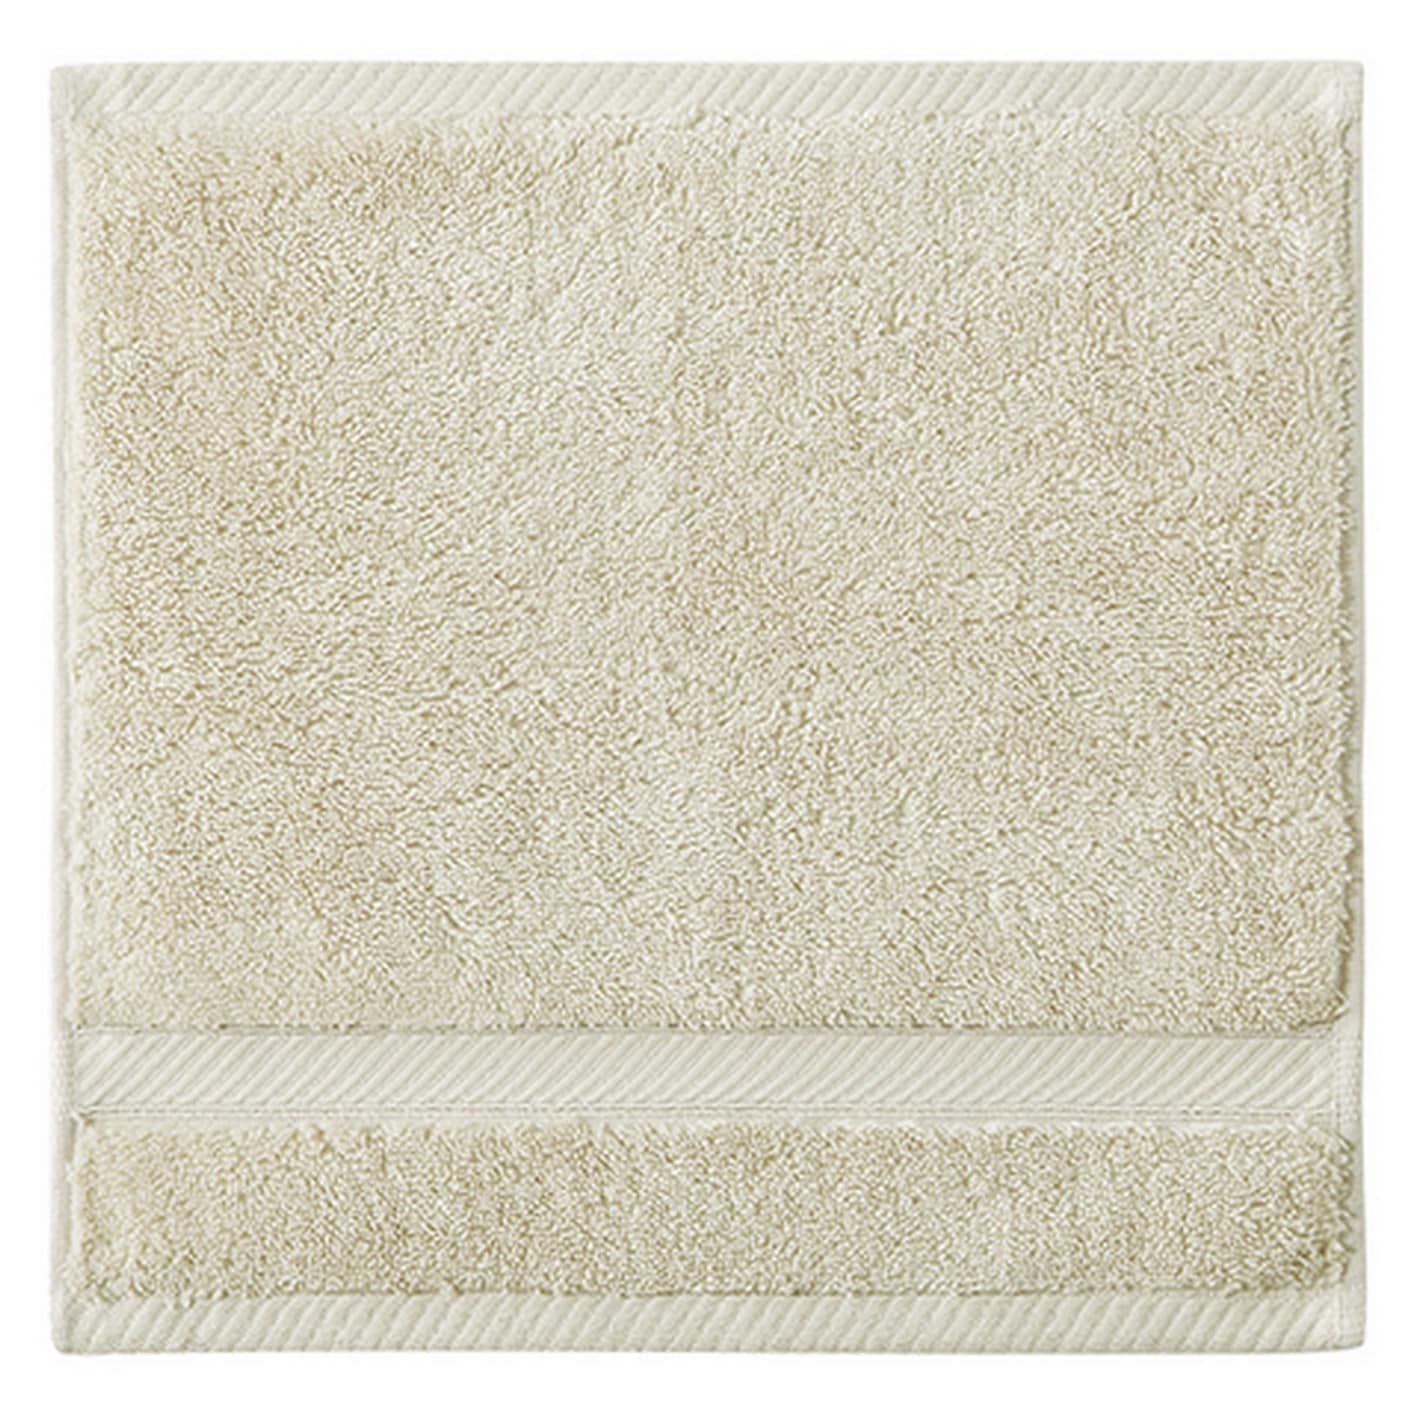 https://ak1.ostkcdn.com/images/products/17982488/Charisma-Classic-II-Towel-Collection-Bath-Hand-Wash-Towel-Sold-Seperately-3de7d93c-c061-4bce-b52e-488cc1294a34.jpg